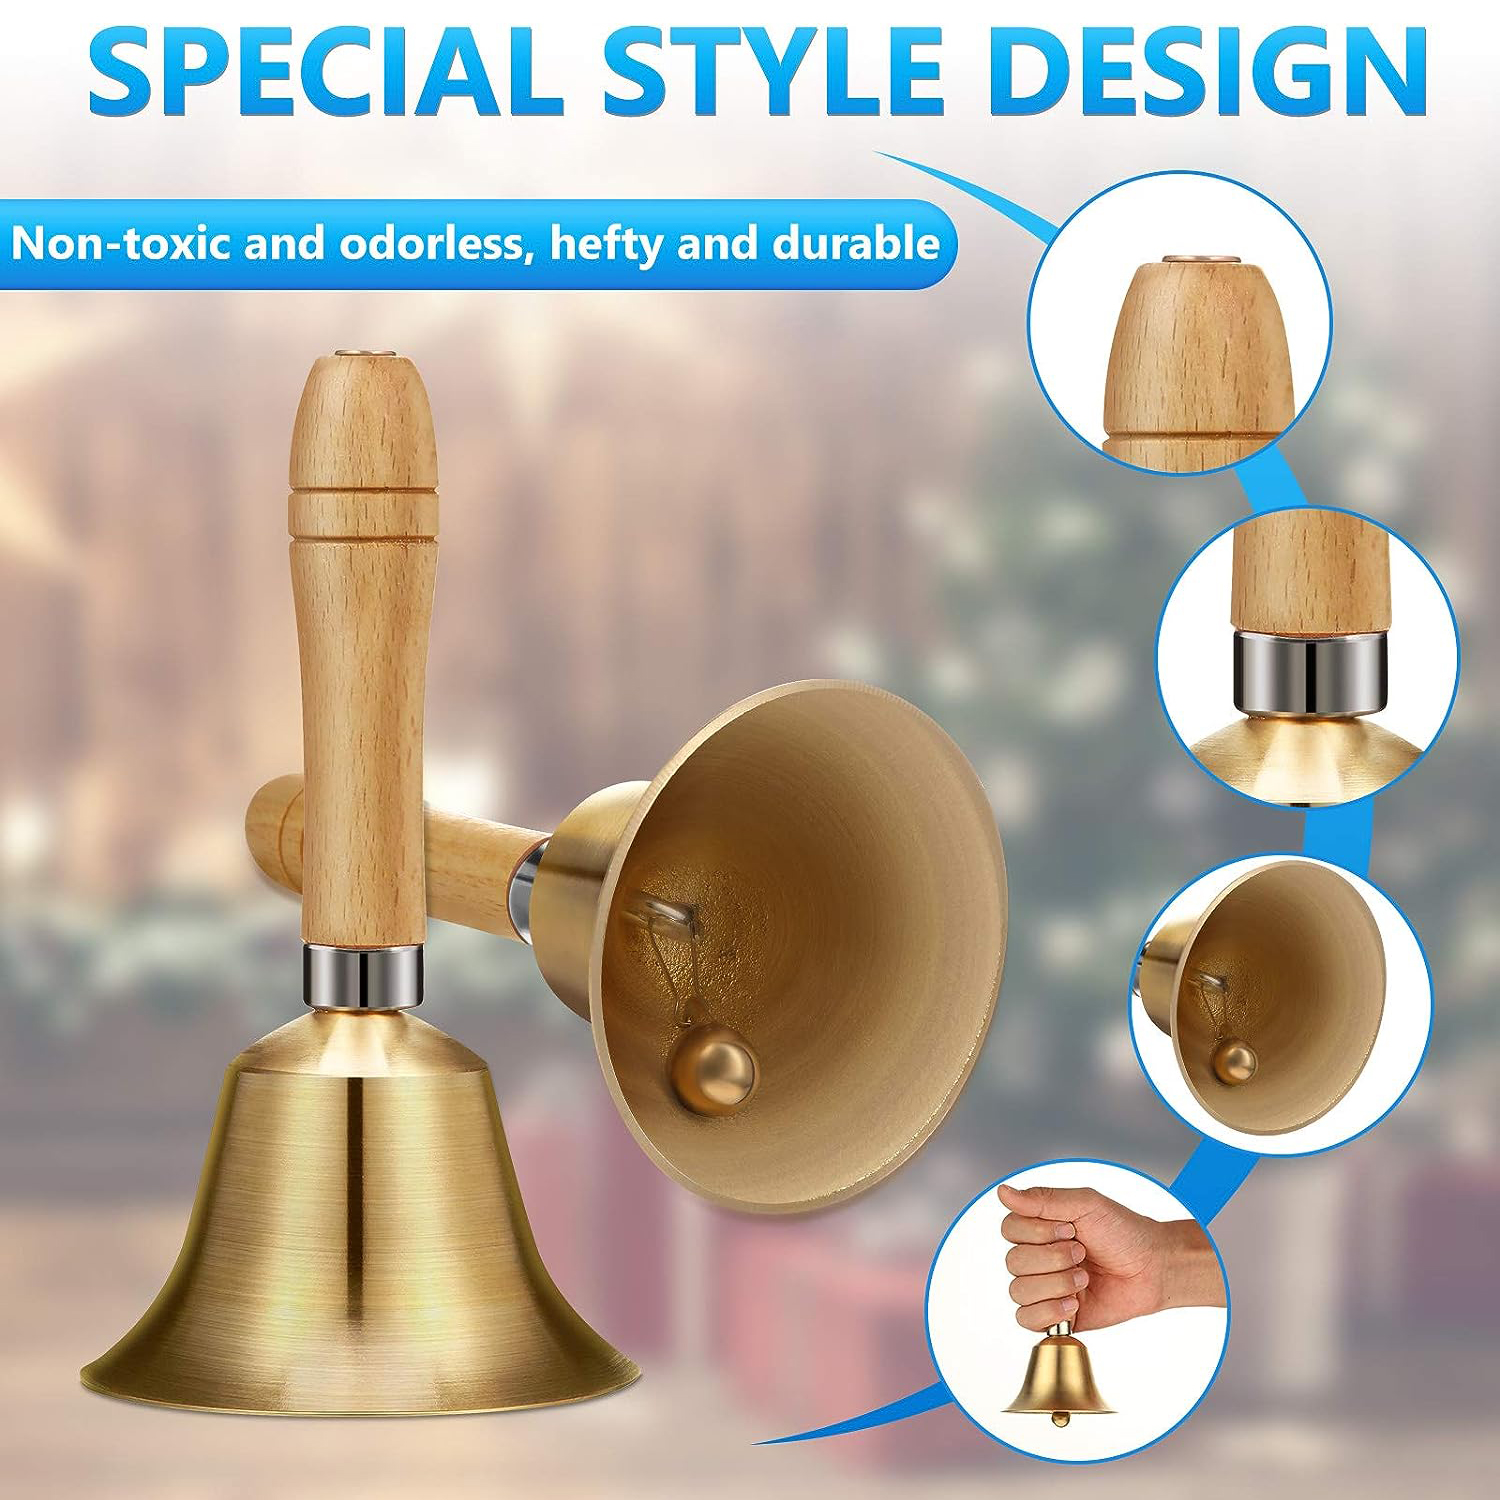 Solid Brass Hand Bells Wooden Handle Handbells Loud Ringing - Temu